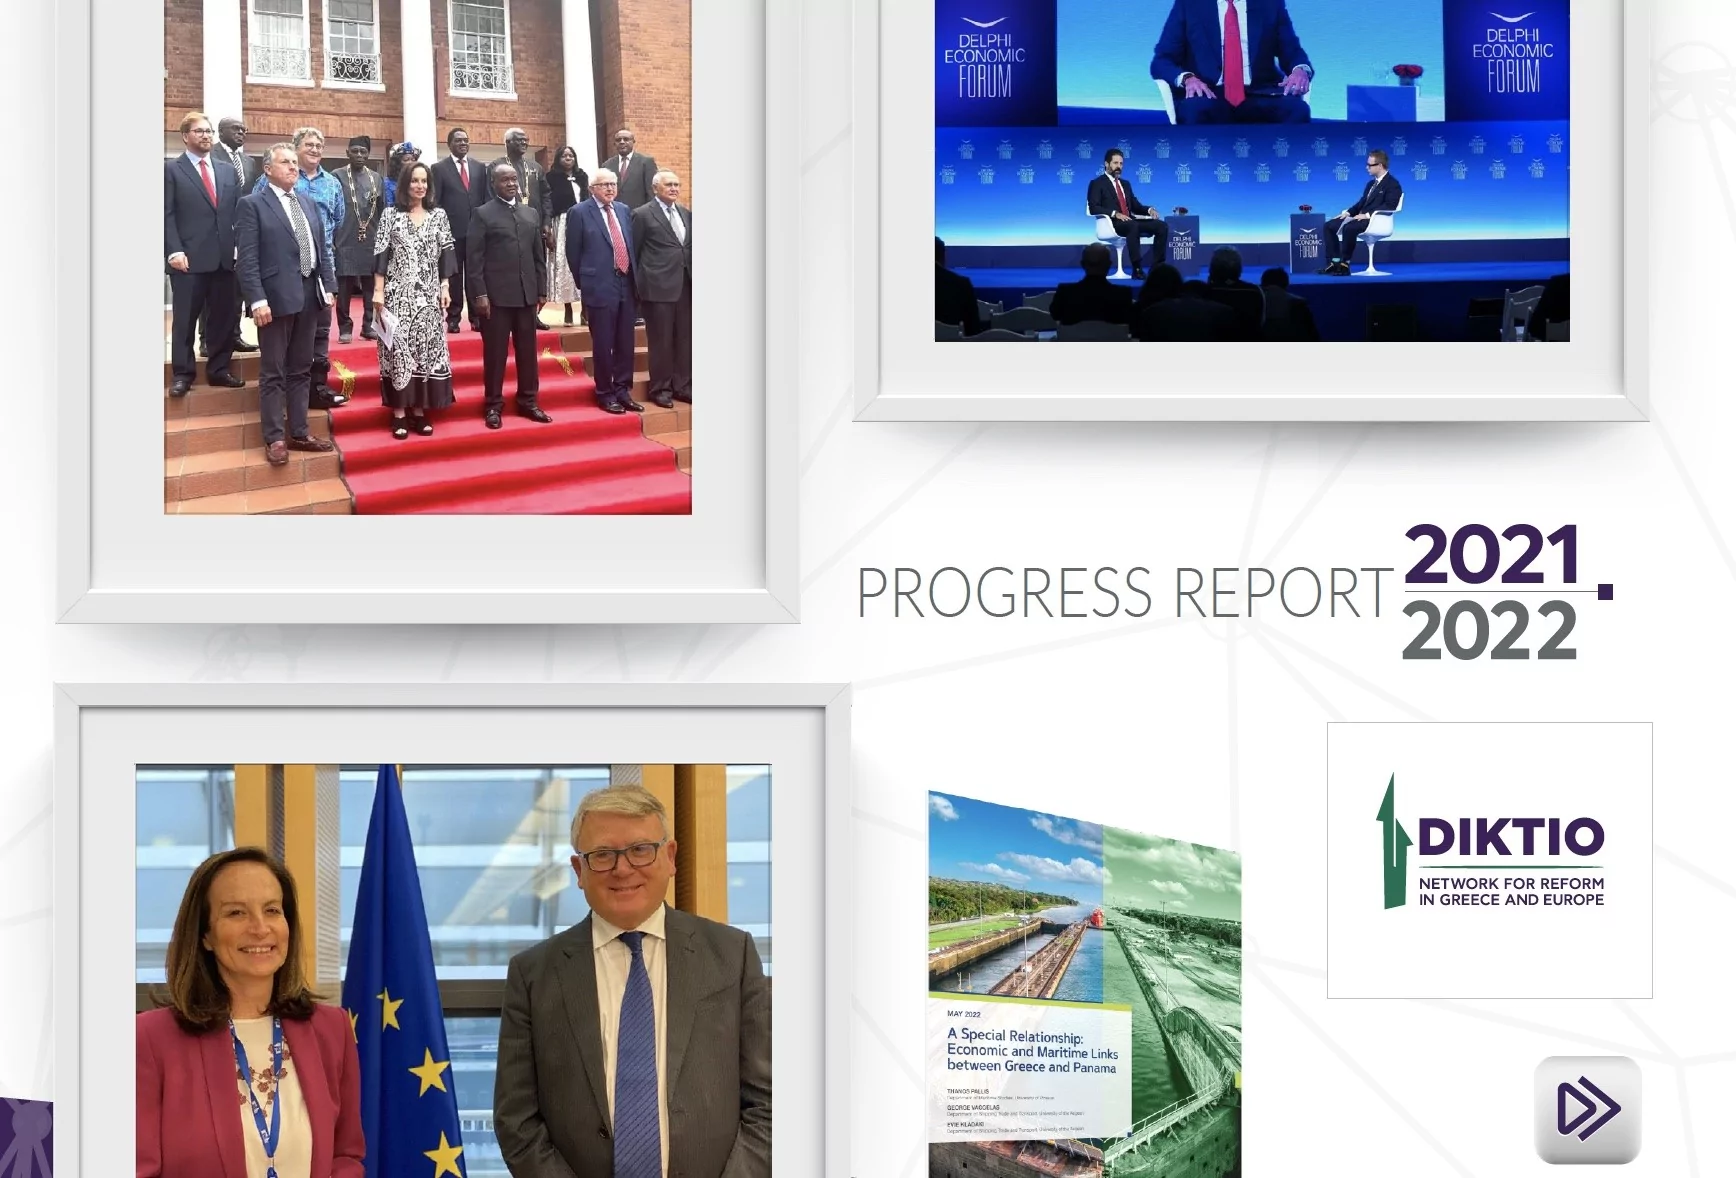 Progress report 2021-2022